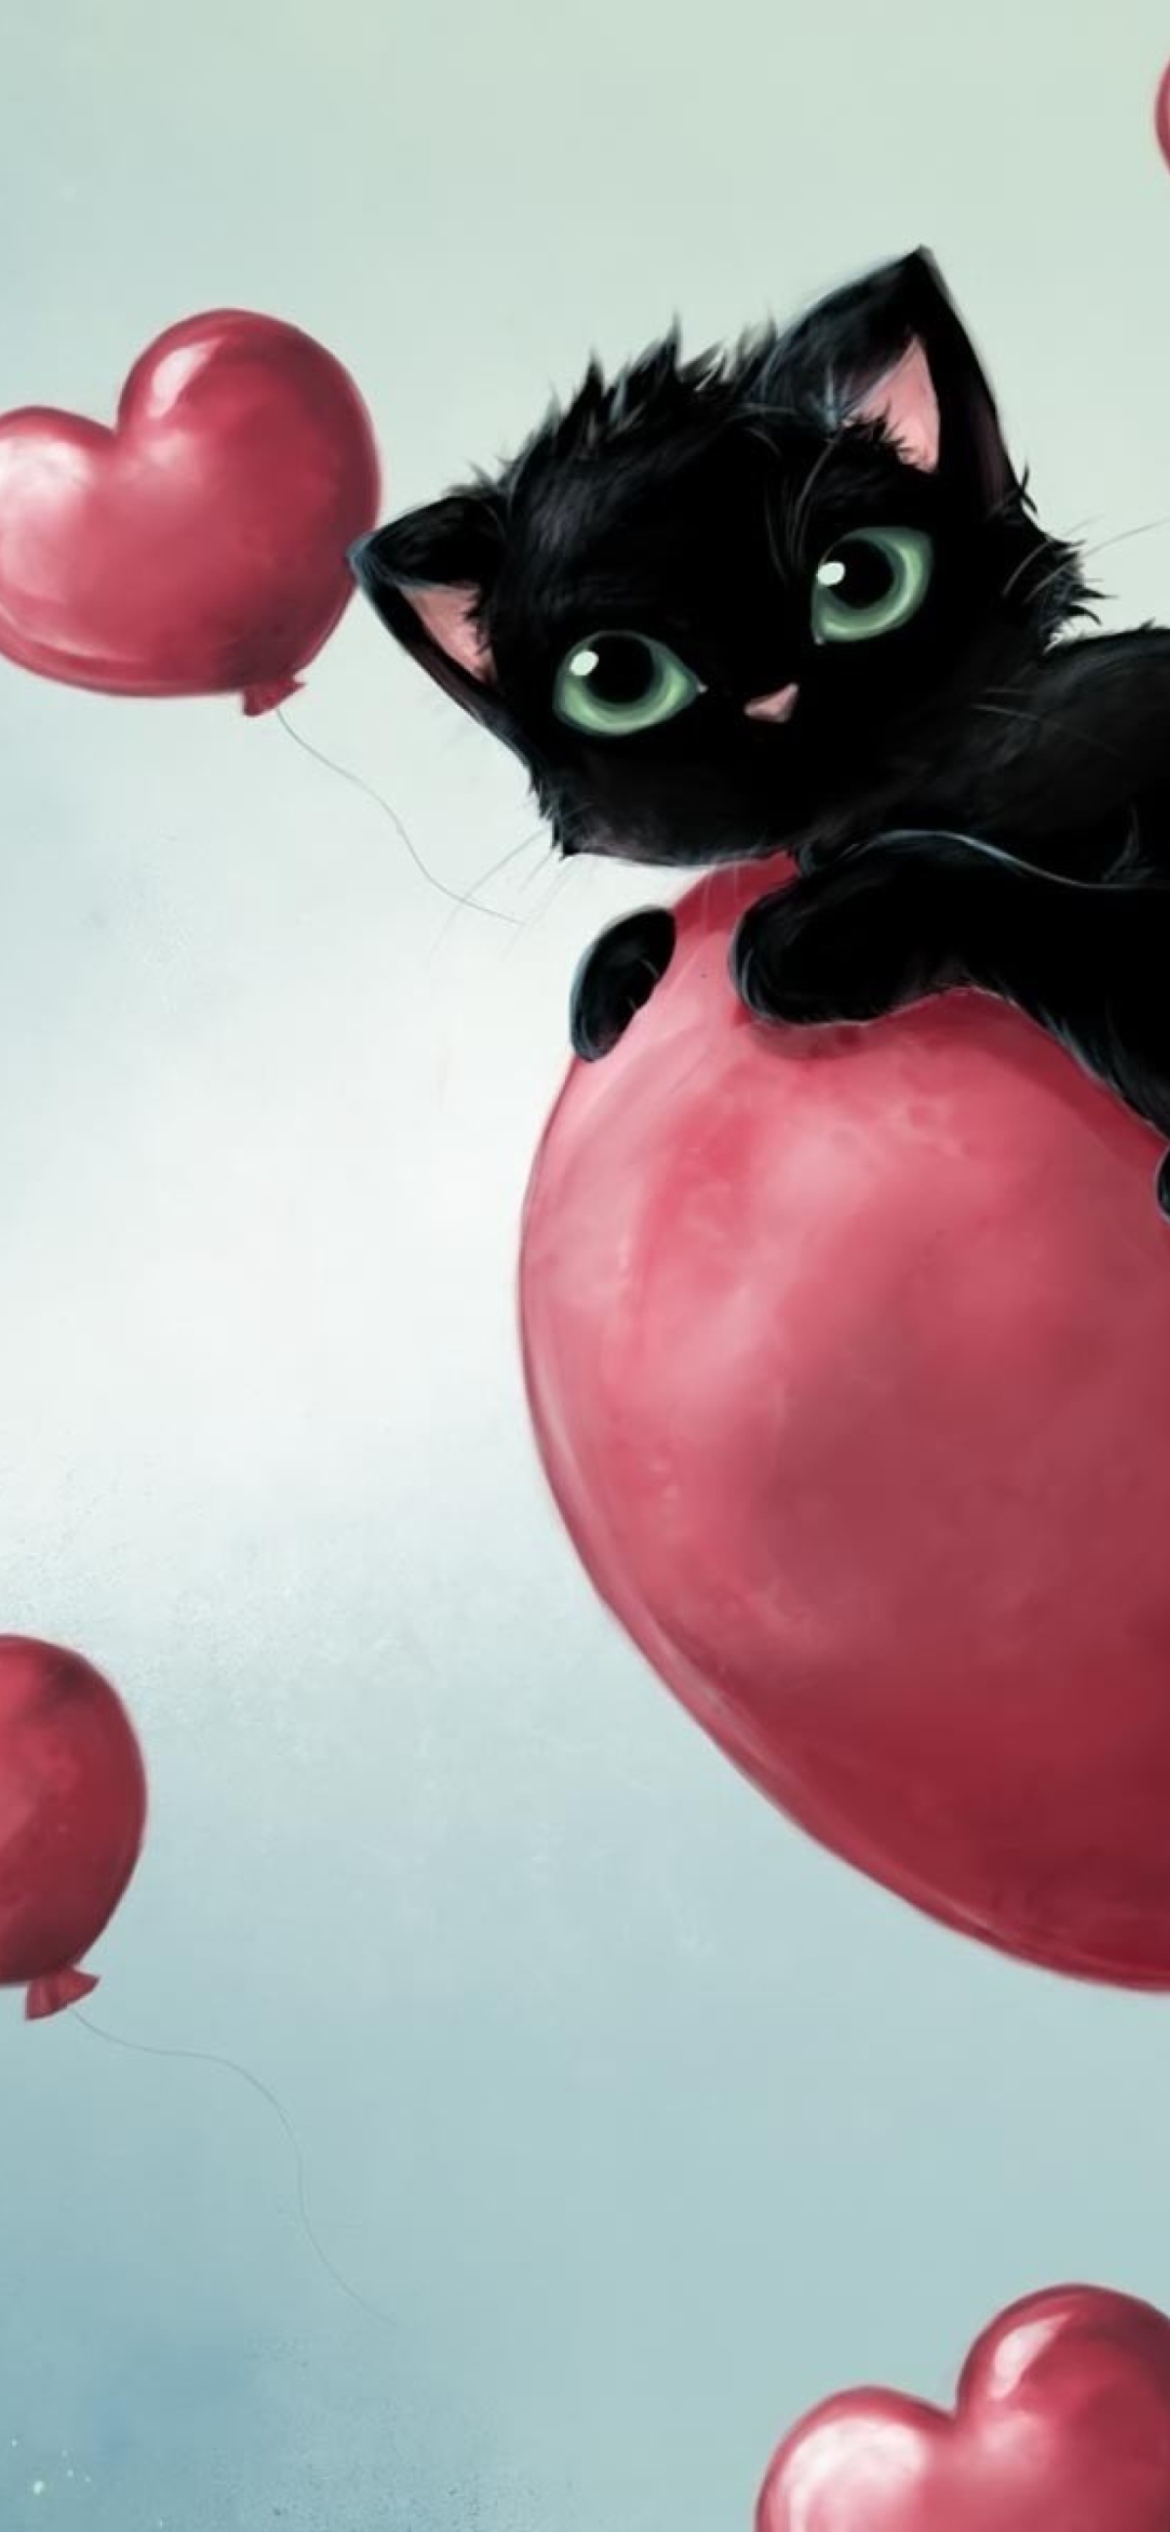 Black Kitty And Red Heart Balloons screenshot #1 1170x2532